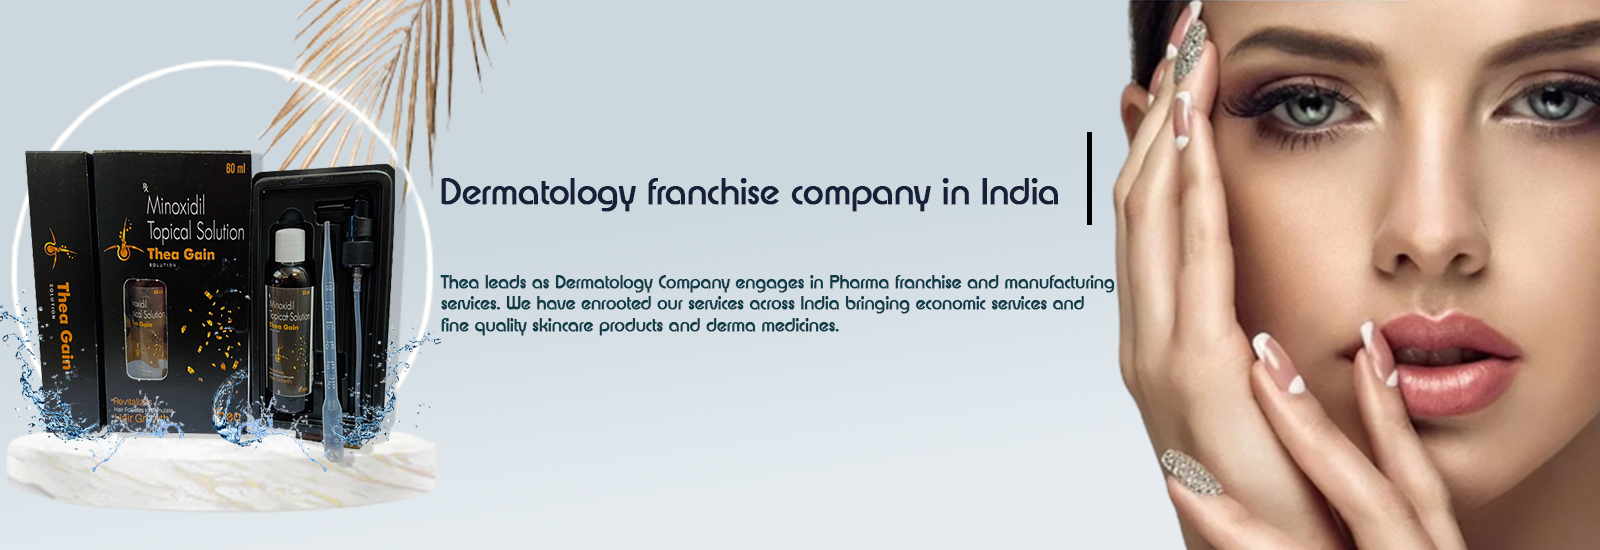 Derma Medicine PCD Franchise Company | Thea Janus